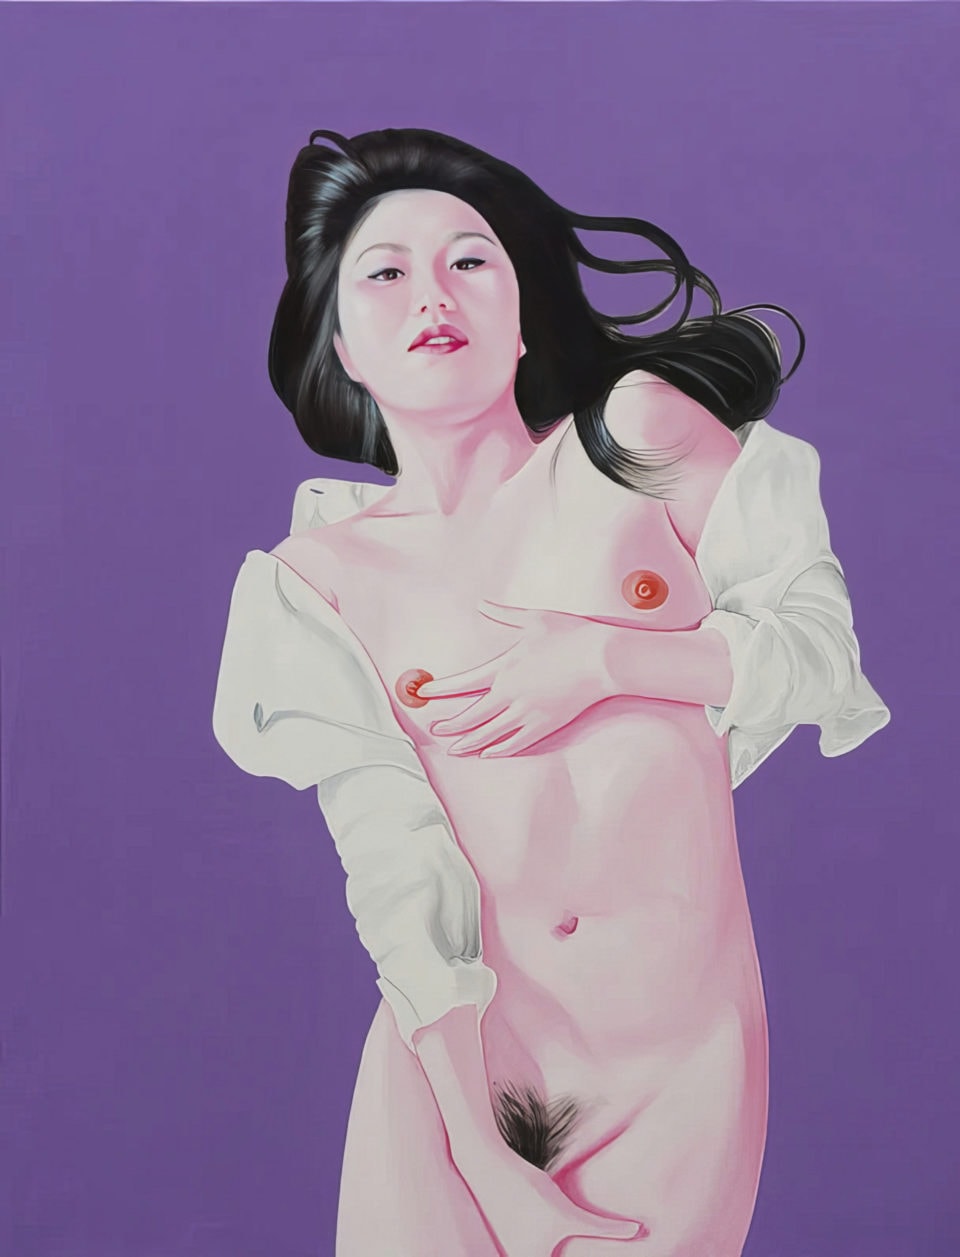 Eunji Huile sur toile oil on canvas 116 x 89 cm